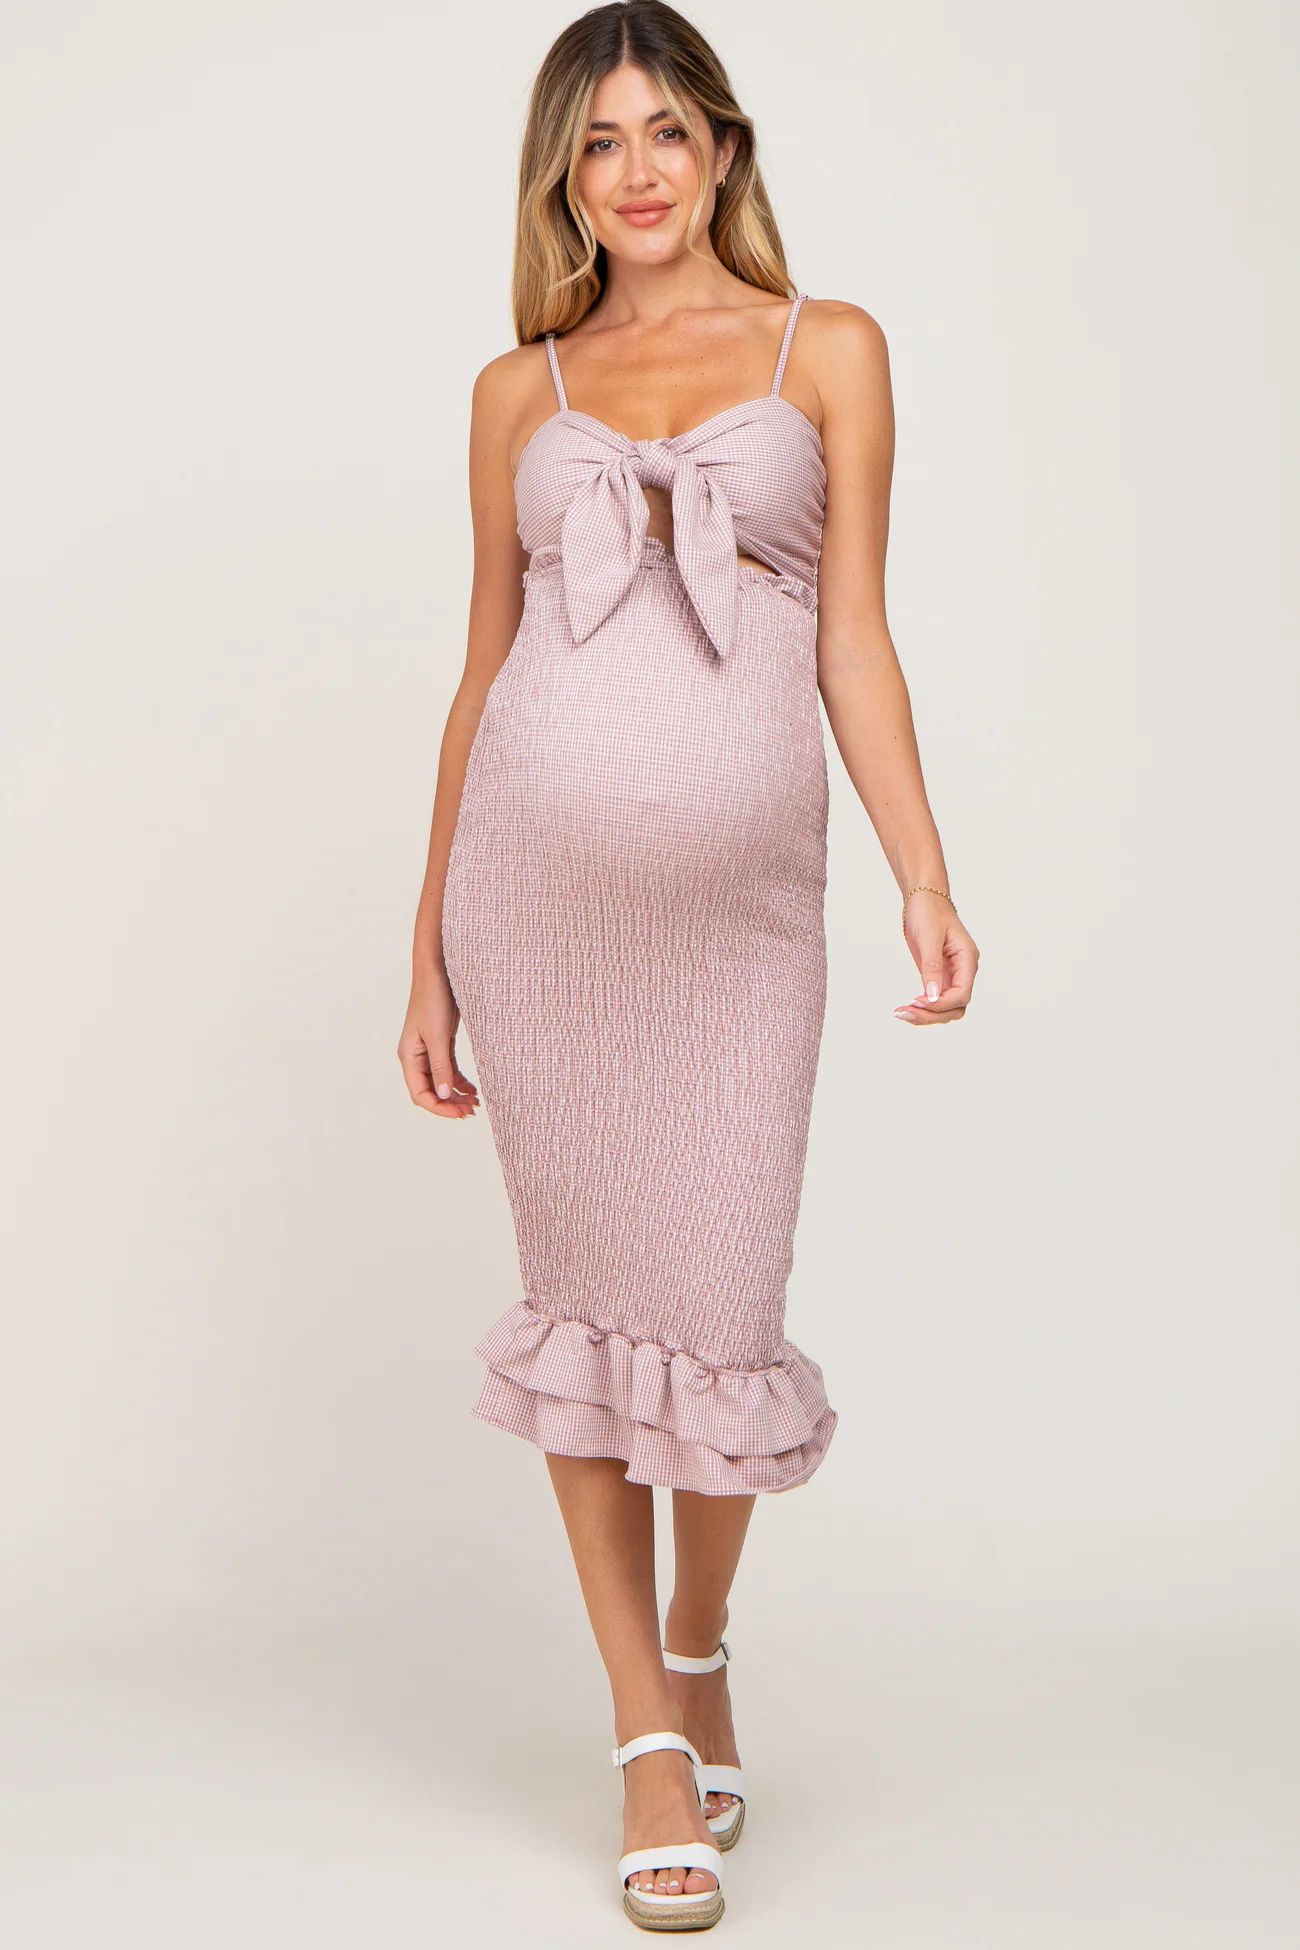 Mauve Gingham Print Smocked Fitted Self-Tie Maternity Midi Dress | PinkBlush Maternity